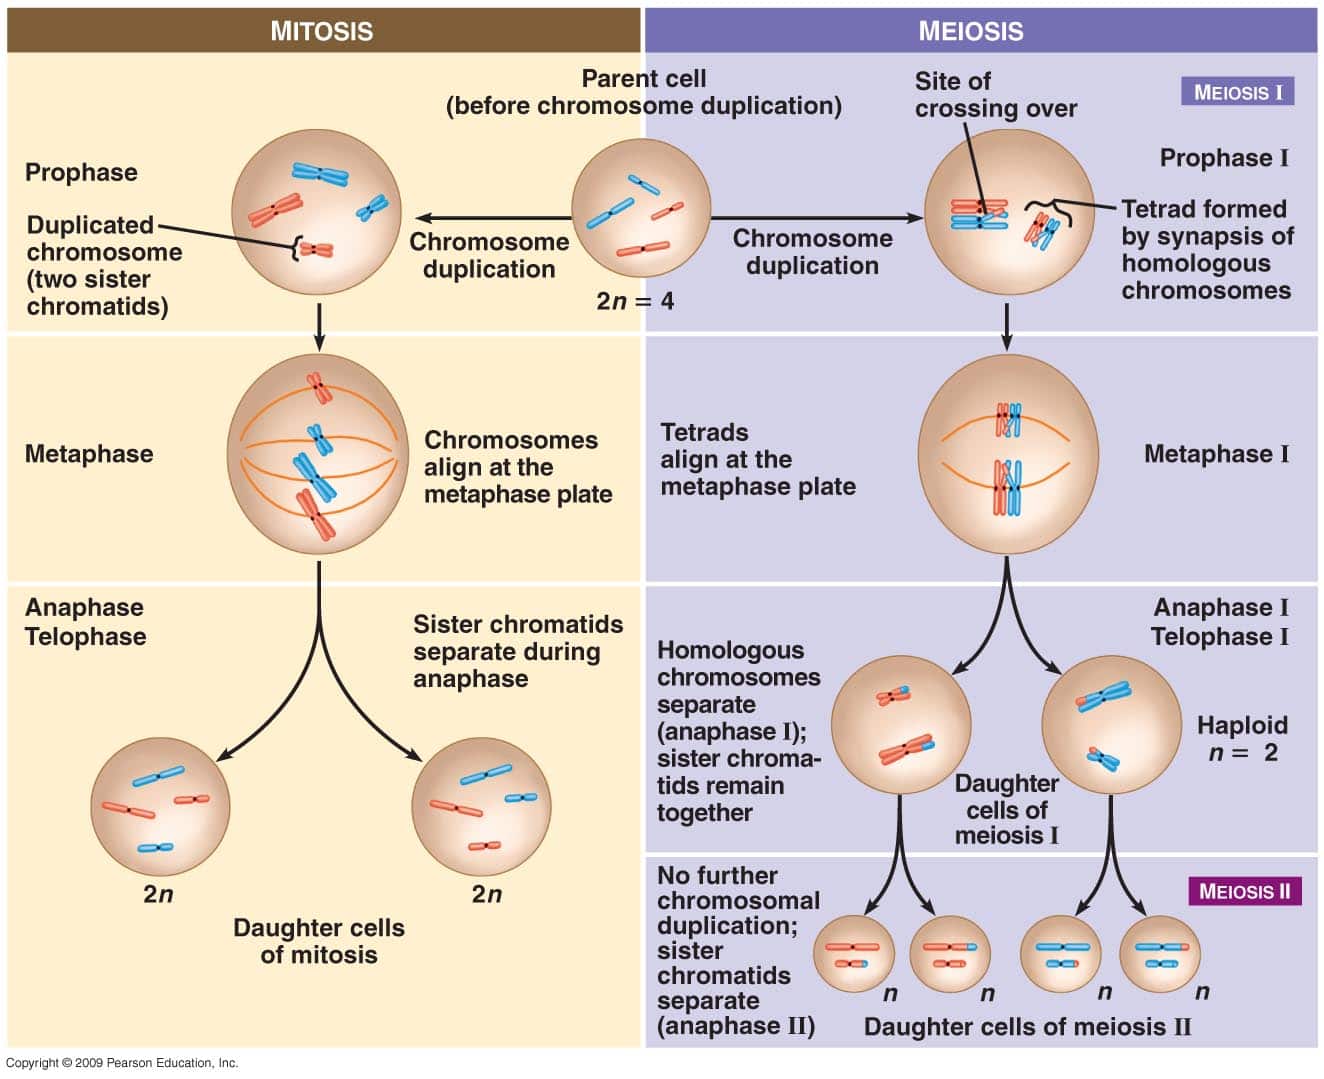 meiosis-vs-mitosis-comparison-schoolworkhelper